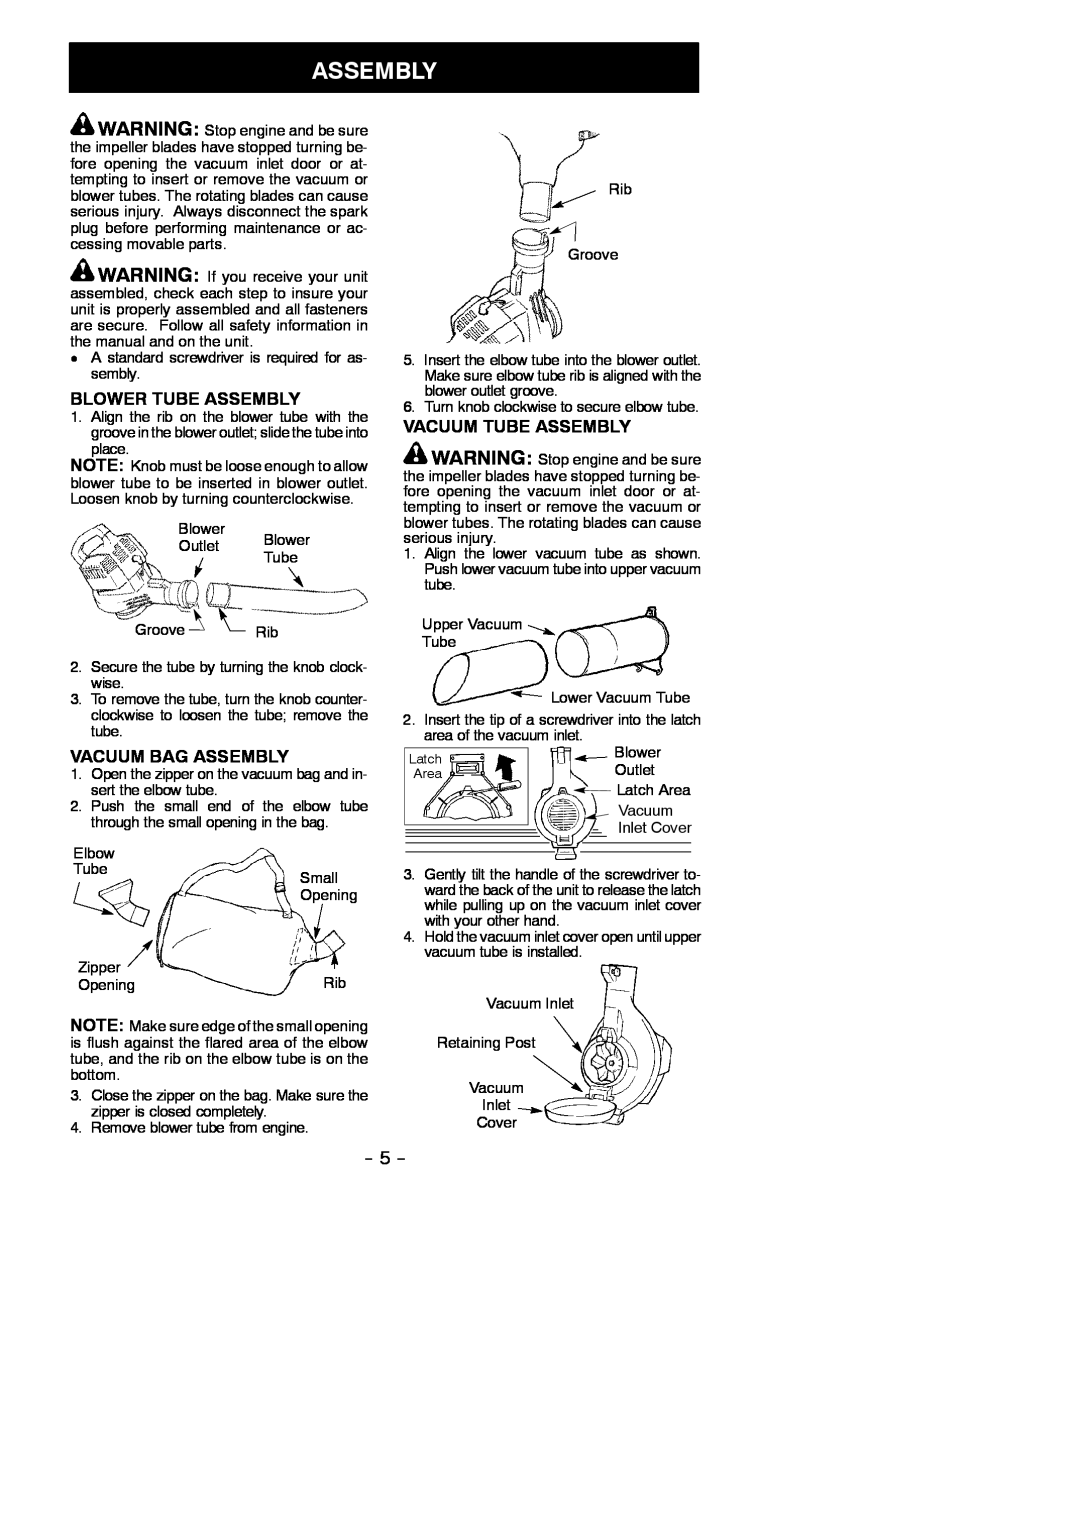 Poulan BVM200 LE instruction manual Blower Tube Assembly, Vacuum Bag Assembly, Vacuum Tube Assembly 